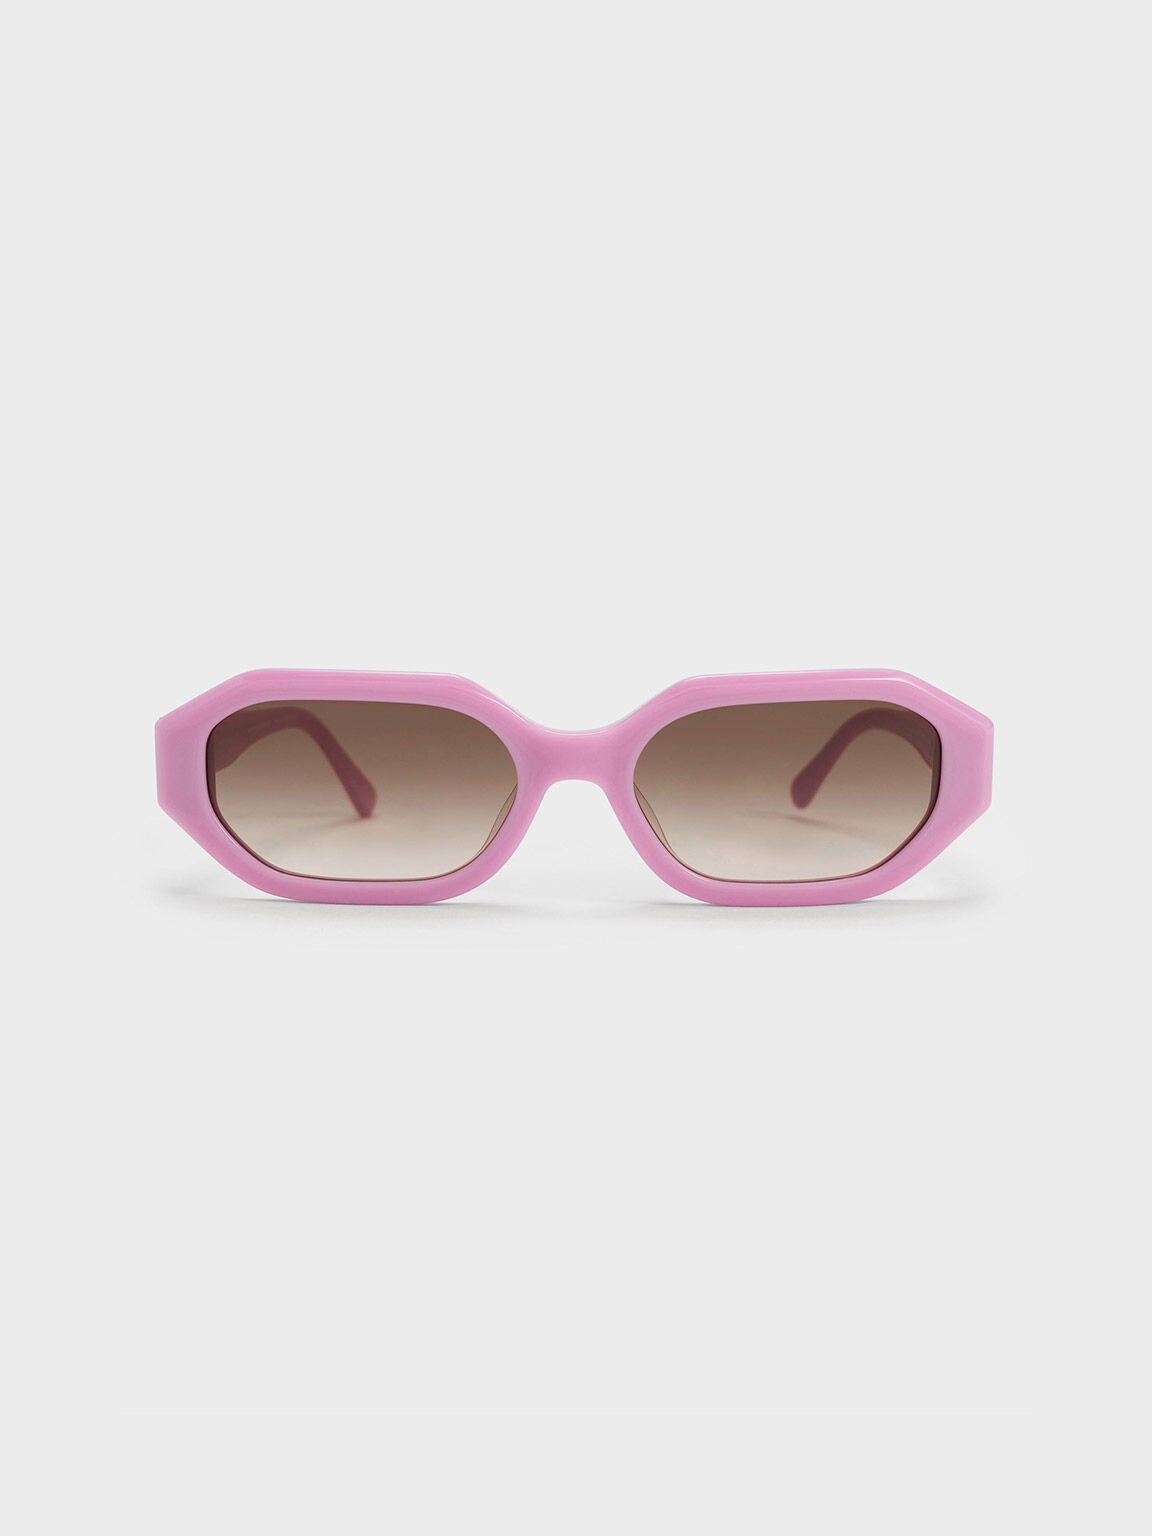 Oval sunglasses | Hamilton Place